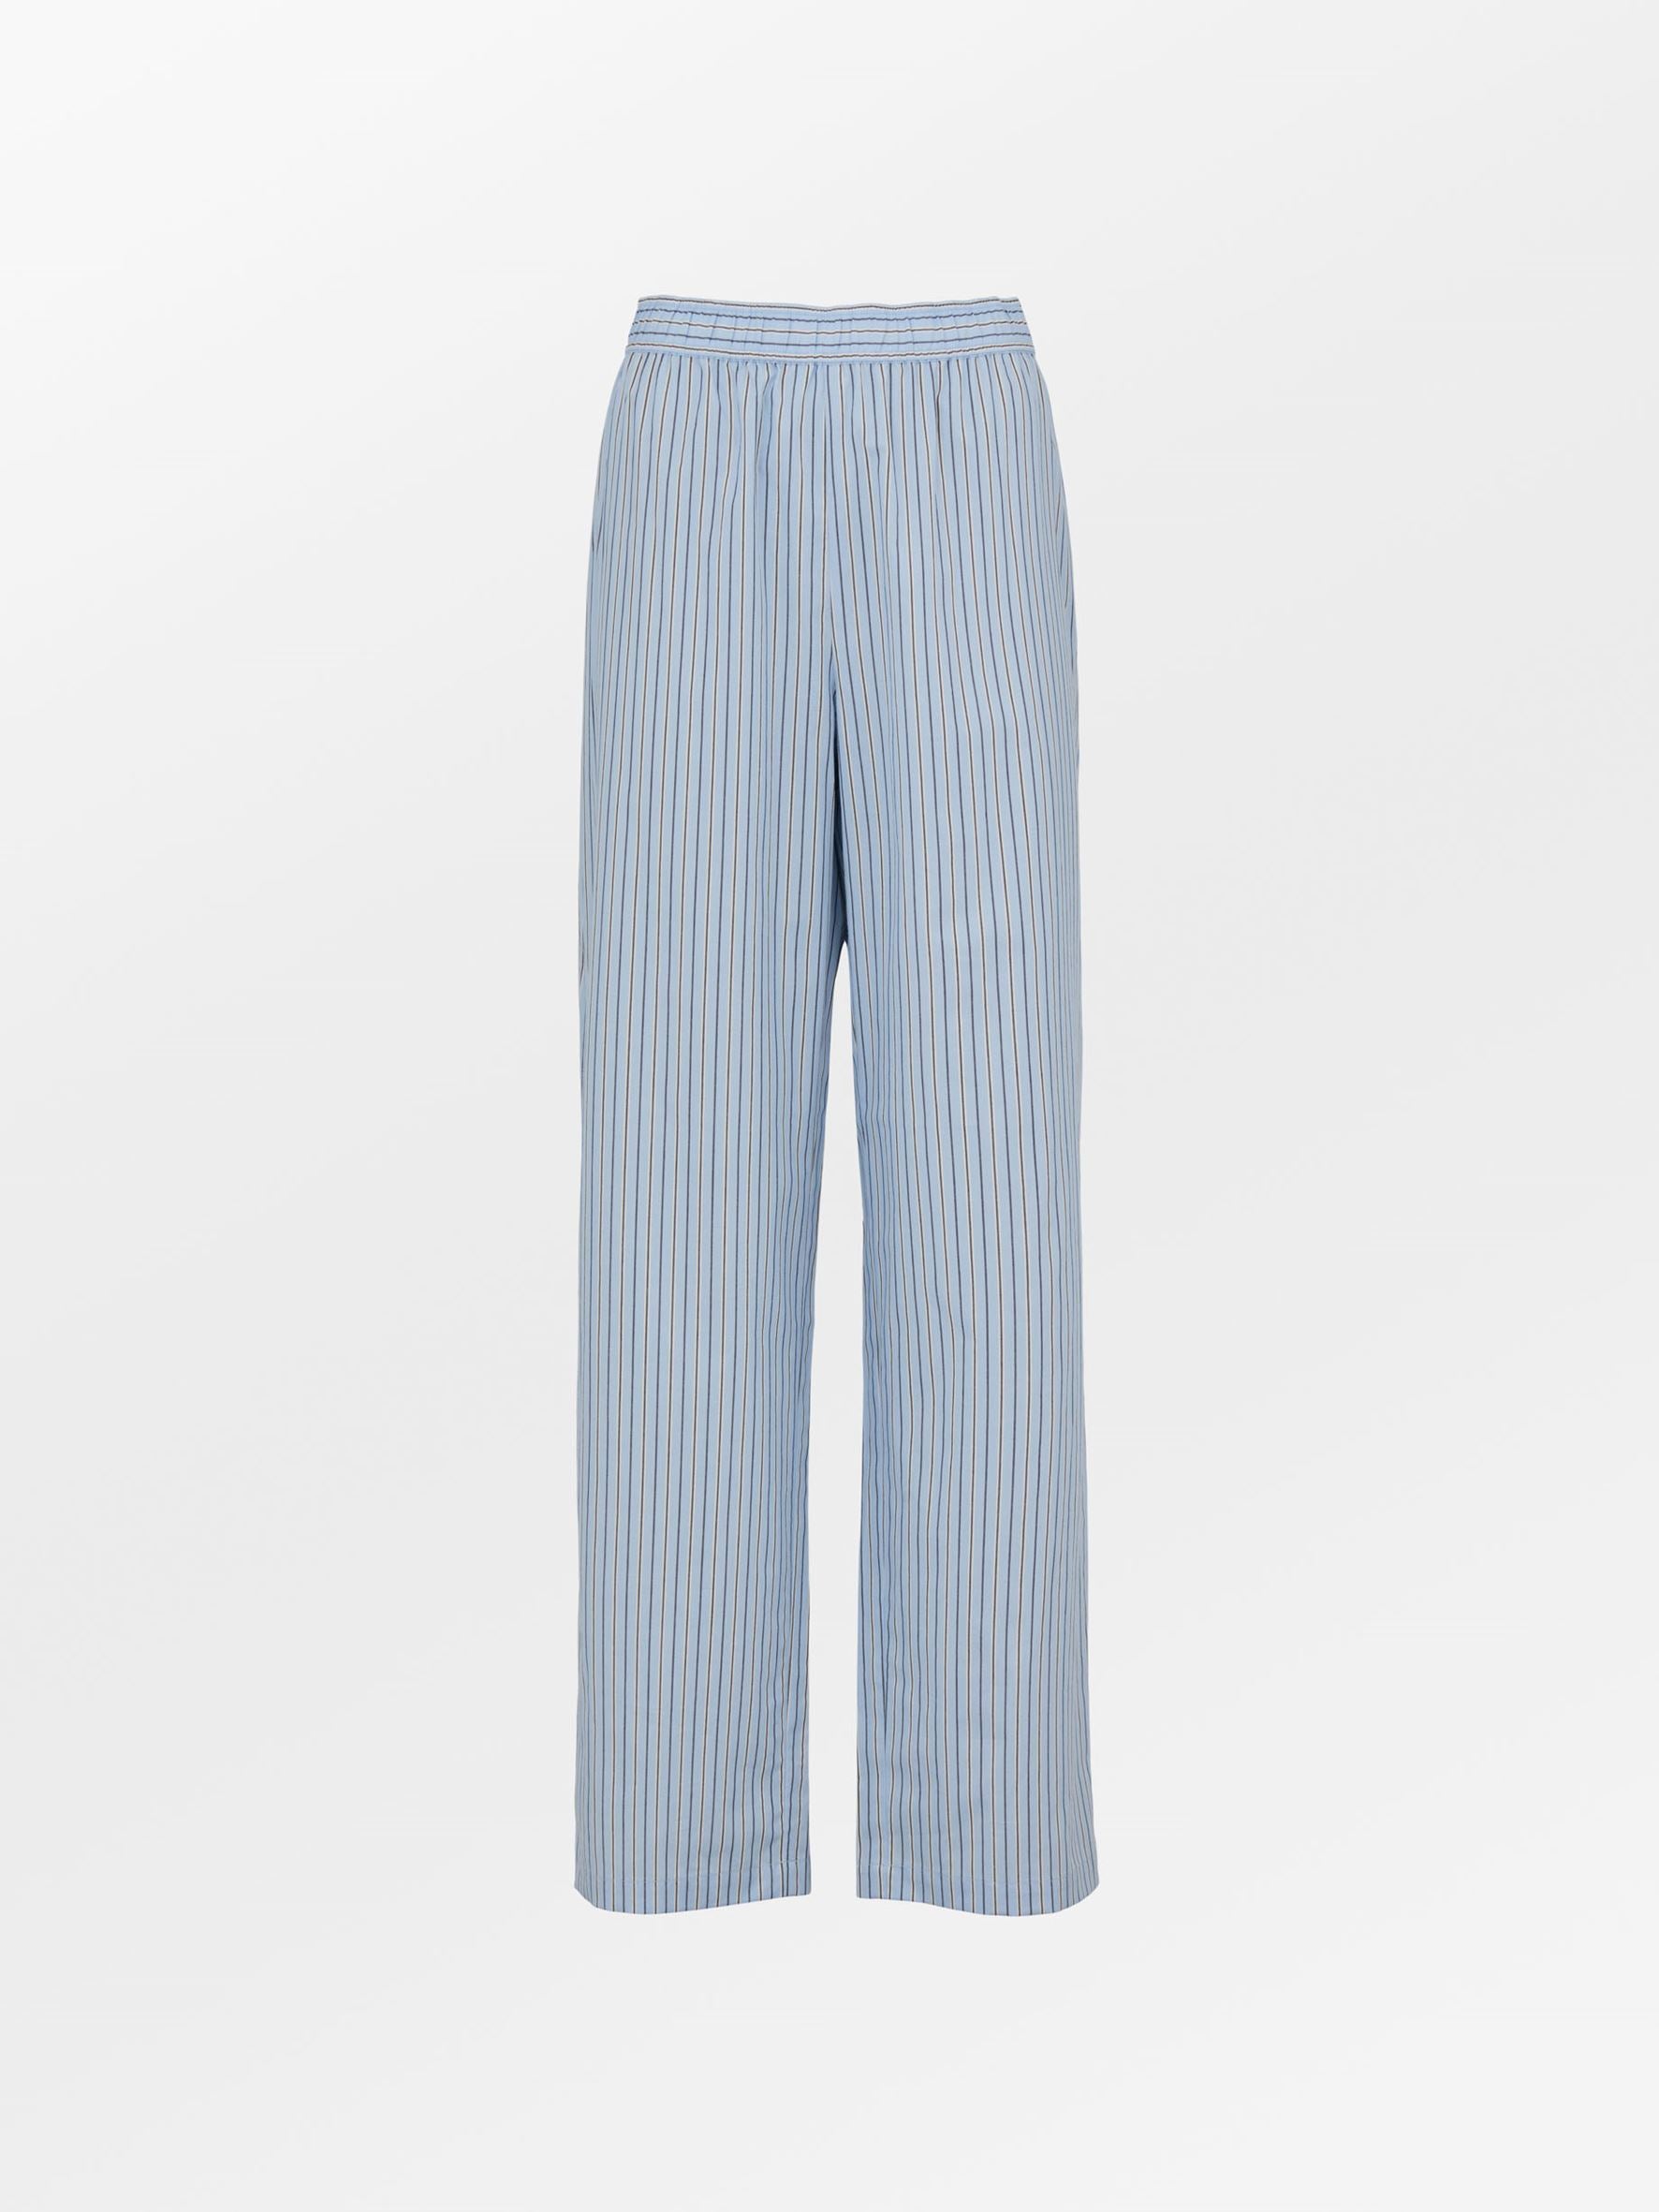 Stripel Pants - Blue Sky Clothing   BeckSöndergaard